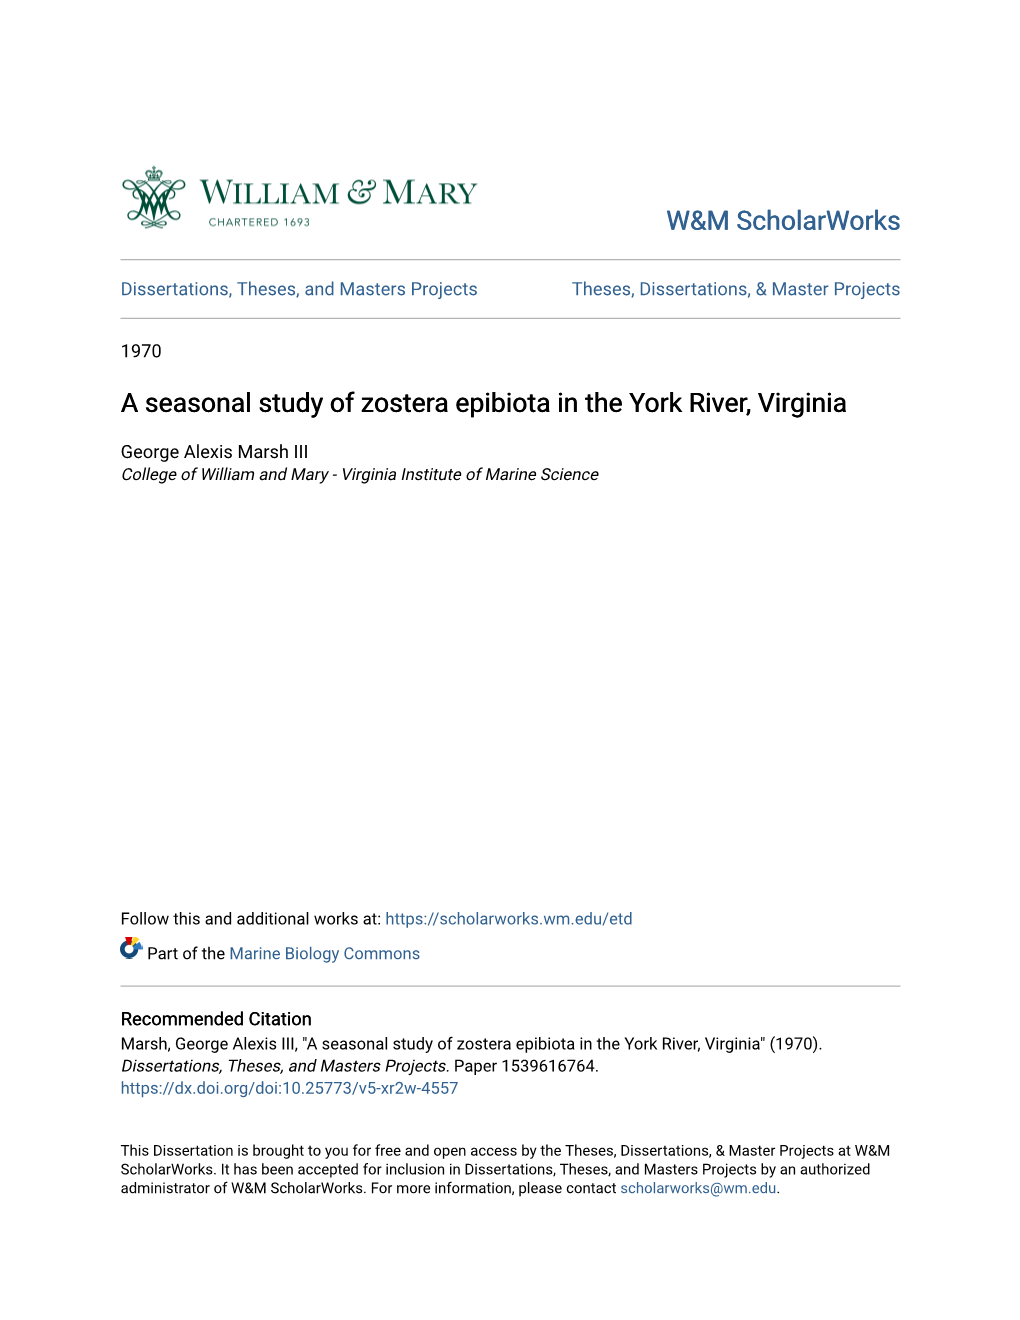 A Seasonal Study of Zostera Epibiota in the York River, Virginia